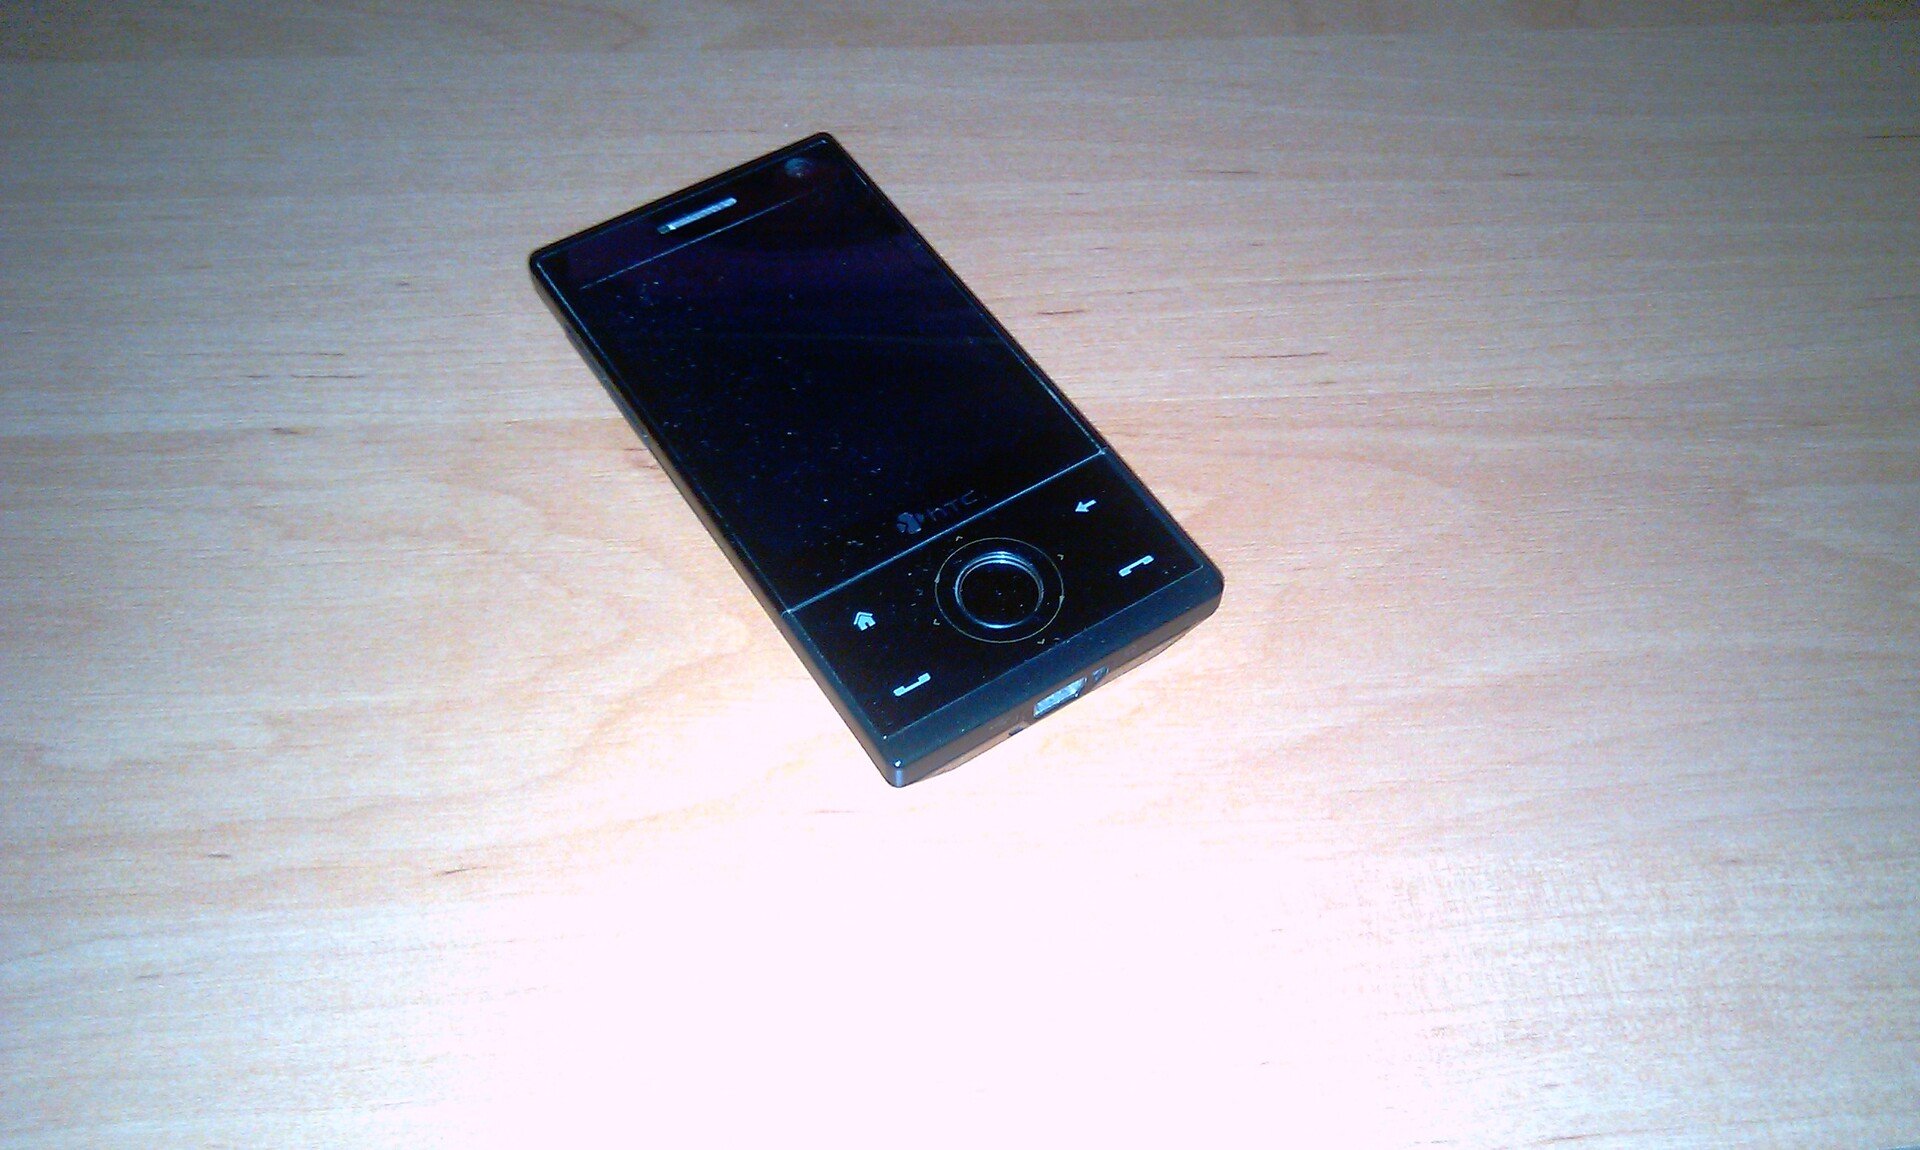 HTC HD 2